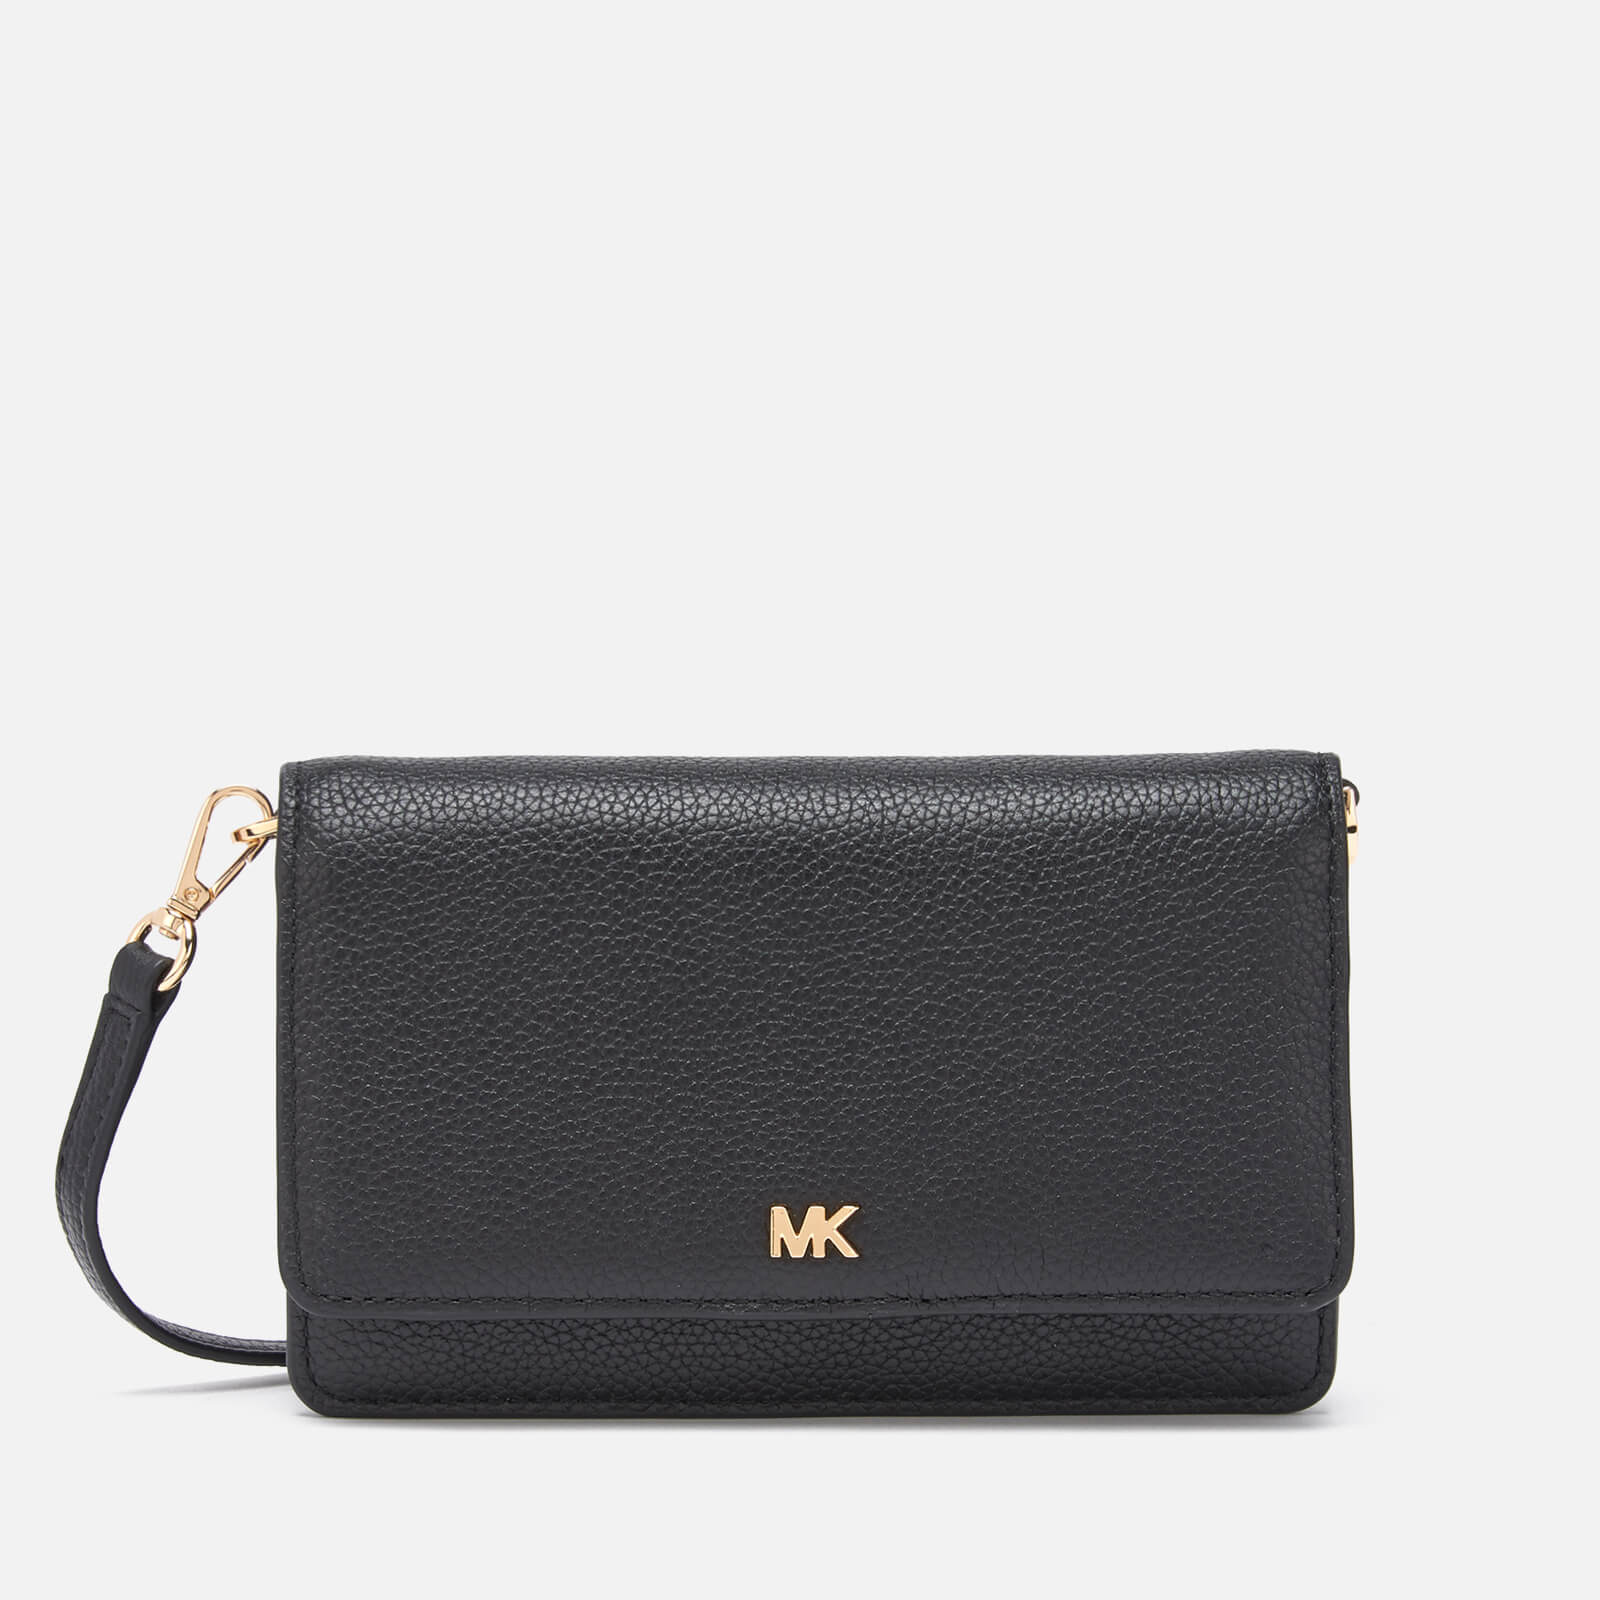 mk phone crossbody bag